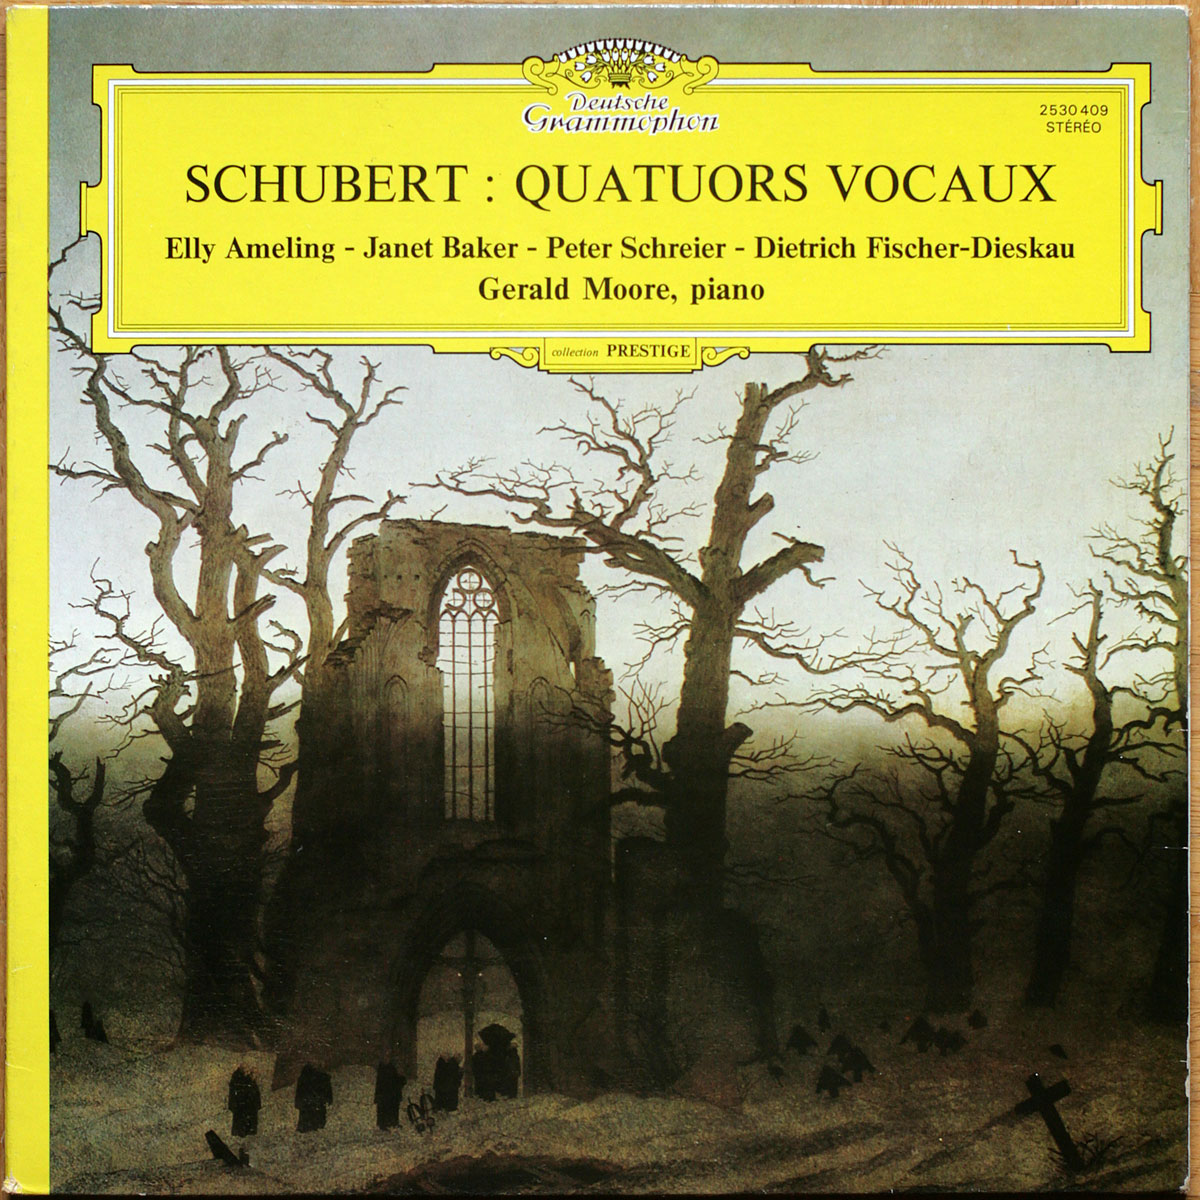 Schubert • Quatuors Vocaux • Vokalquartette • Vocal Quartets • DGG 2530 409 • Elly Ameling • Janet Baker • Peter Schreier • Dietrich Fischer-Dieskau • Gerald Moore